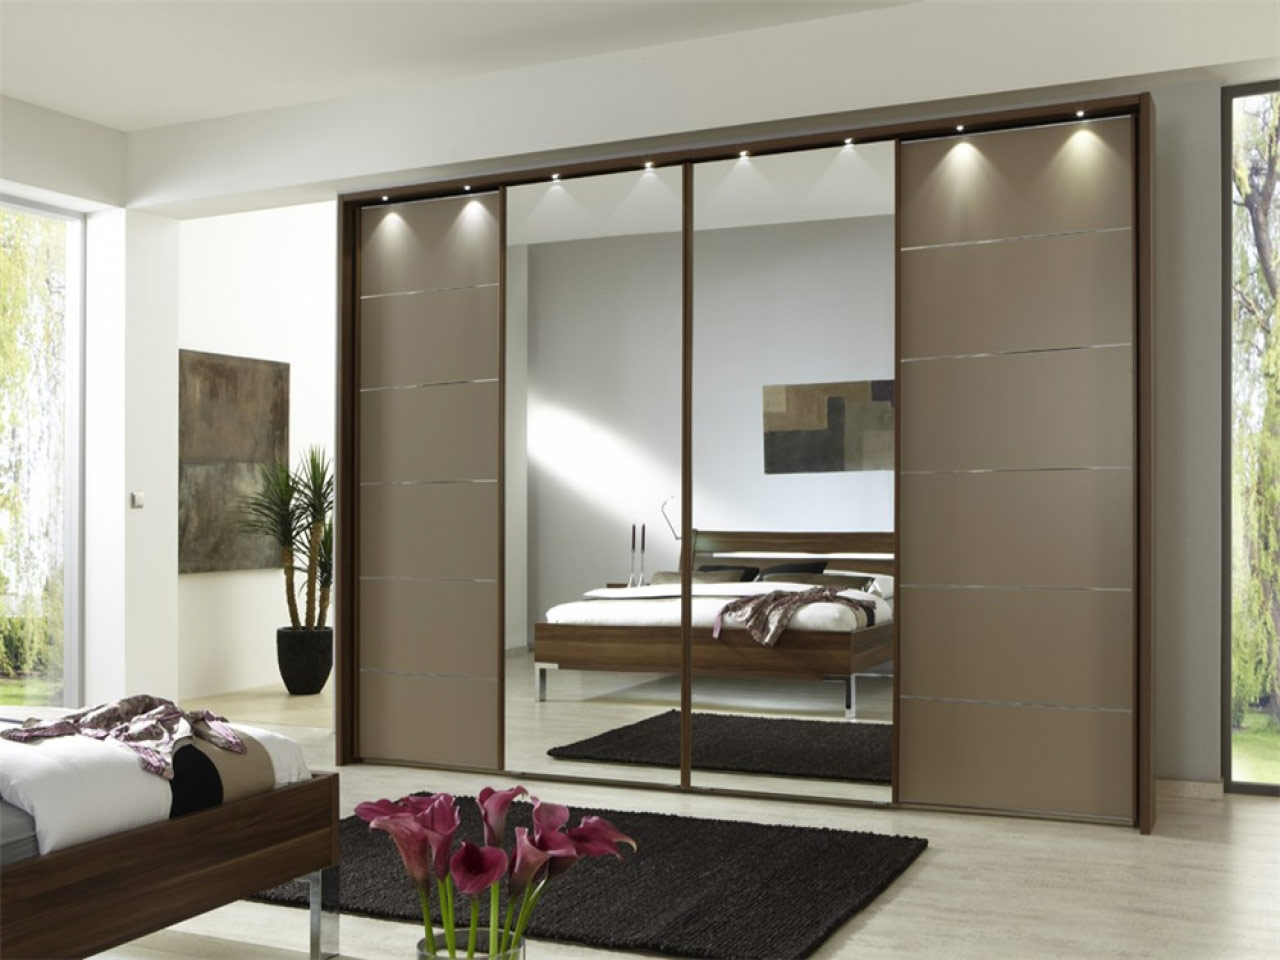 Modern Bedroom Cupboards Designs And, Mirror Cabinet Design For Bedroom